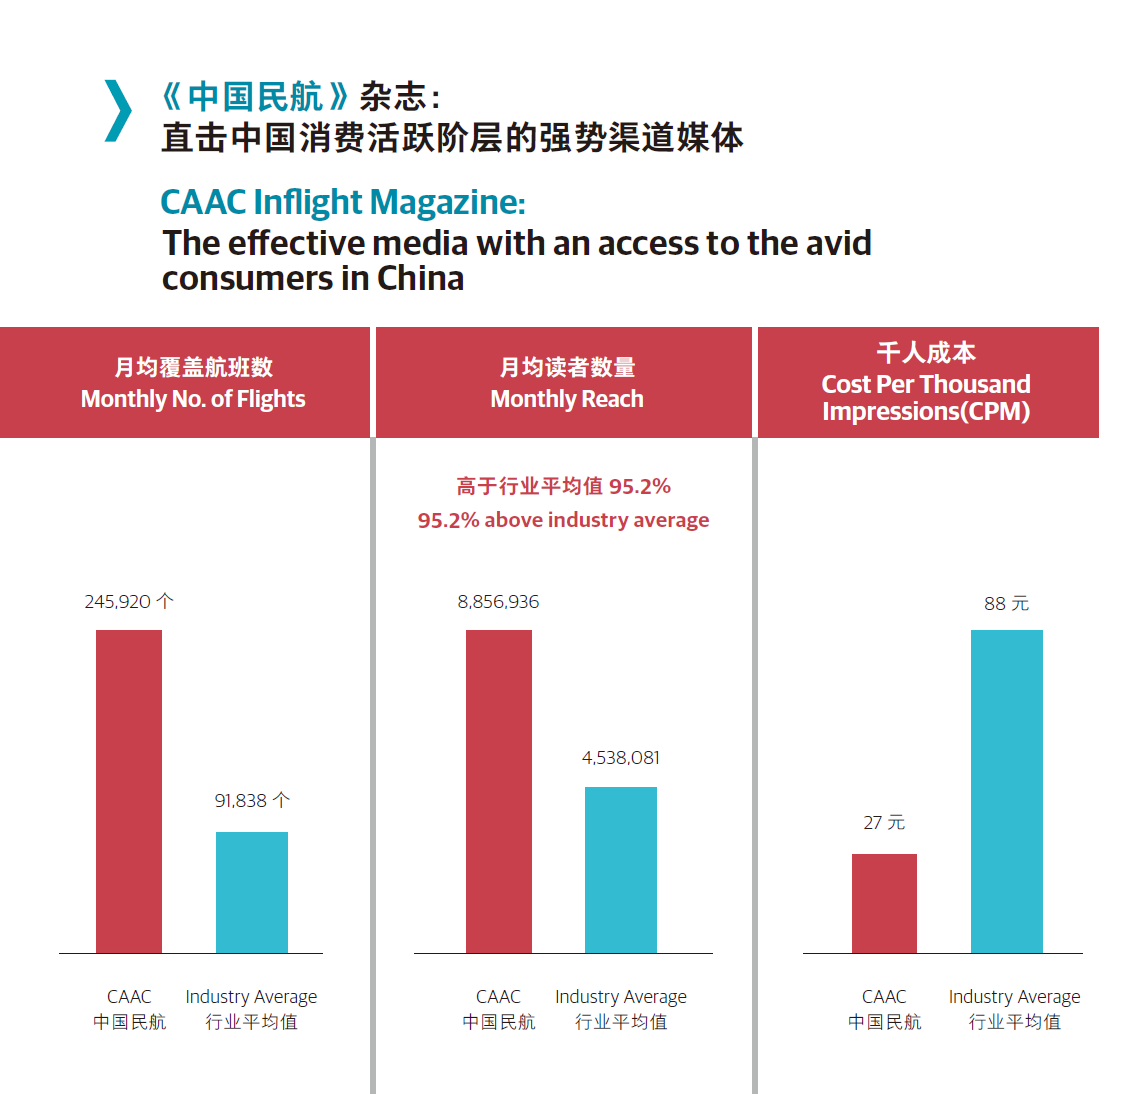 CAAC inflight magazine advertising influence